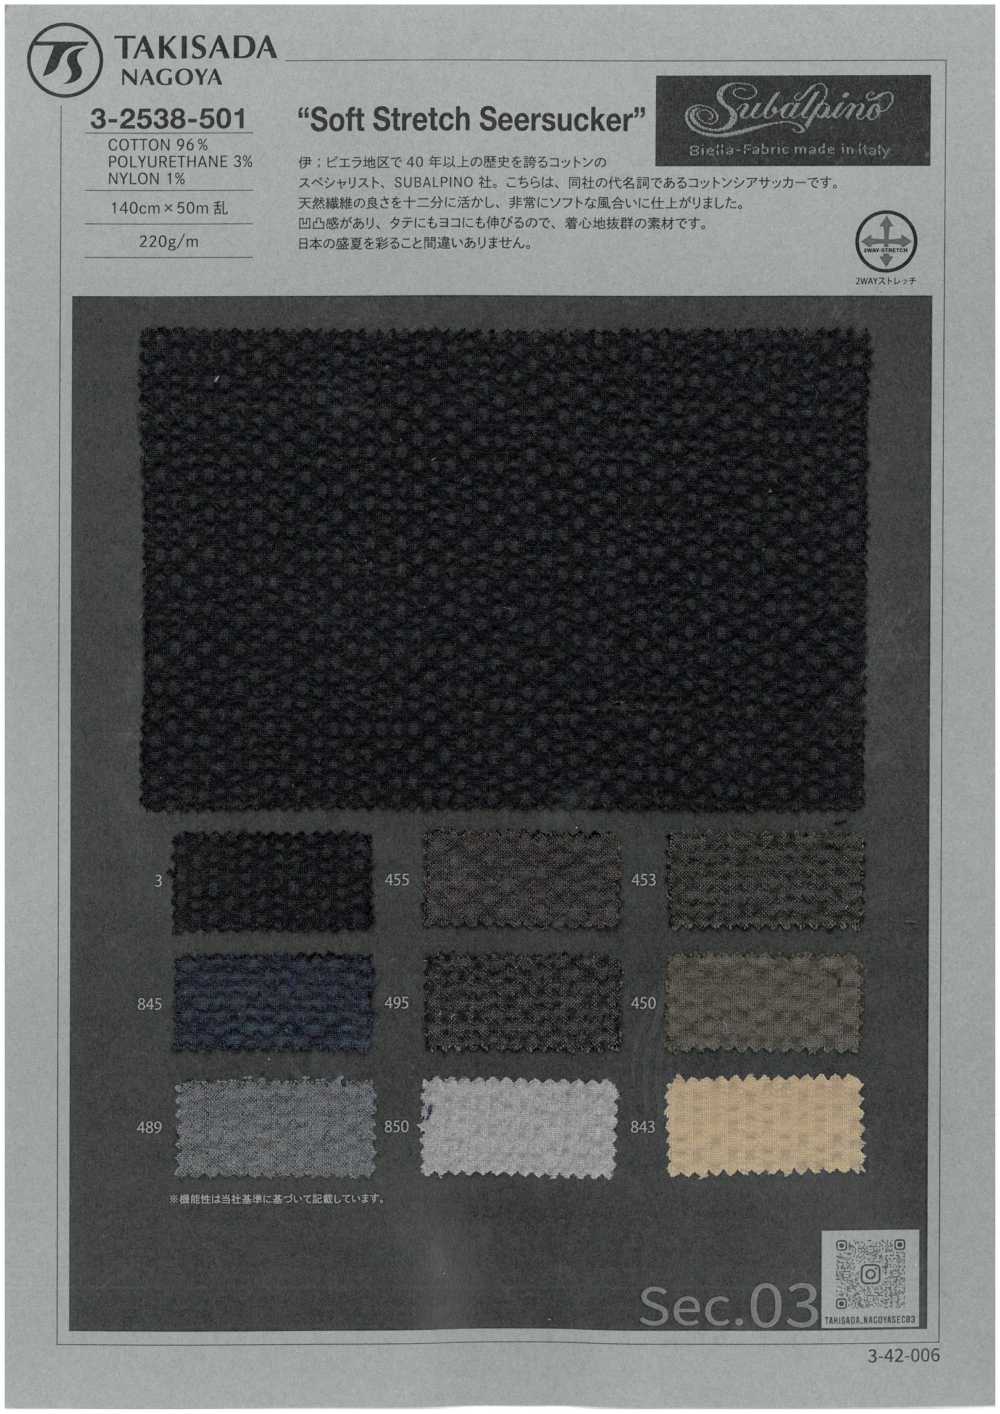 3-2538-501 SUBALPINO Soft Stretch Seersucker Sem Padrão[Têxtil / Tecido] Takisada Nagoya